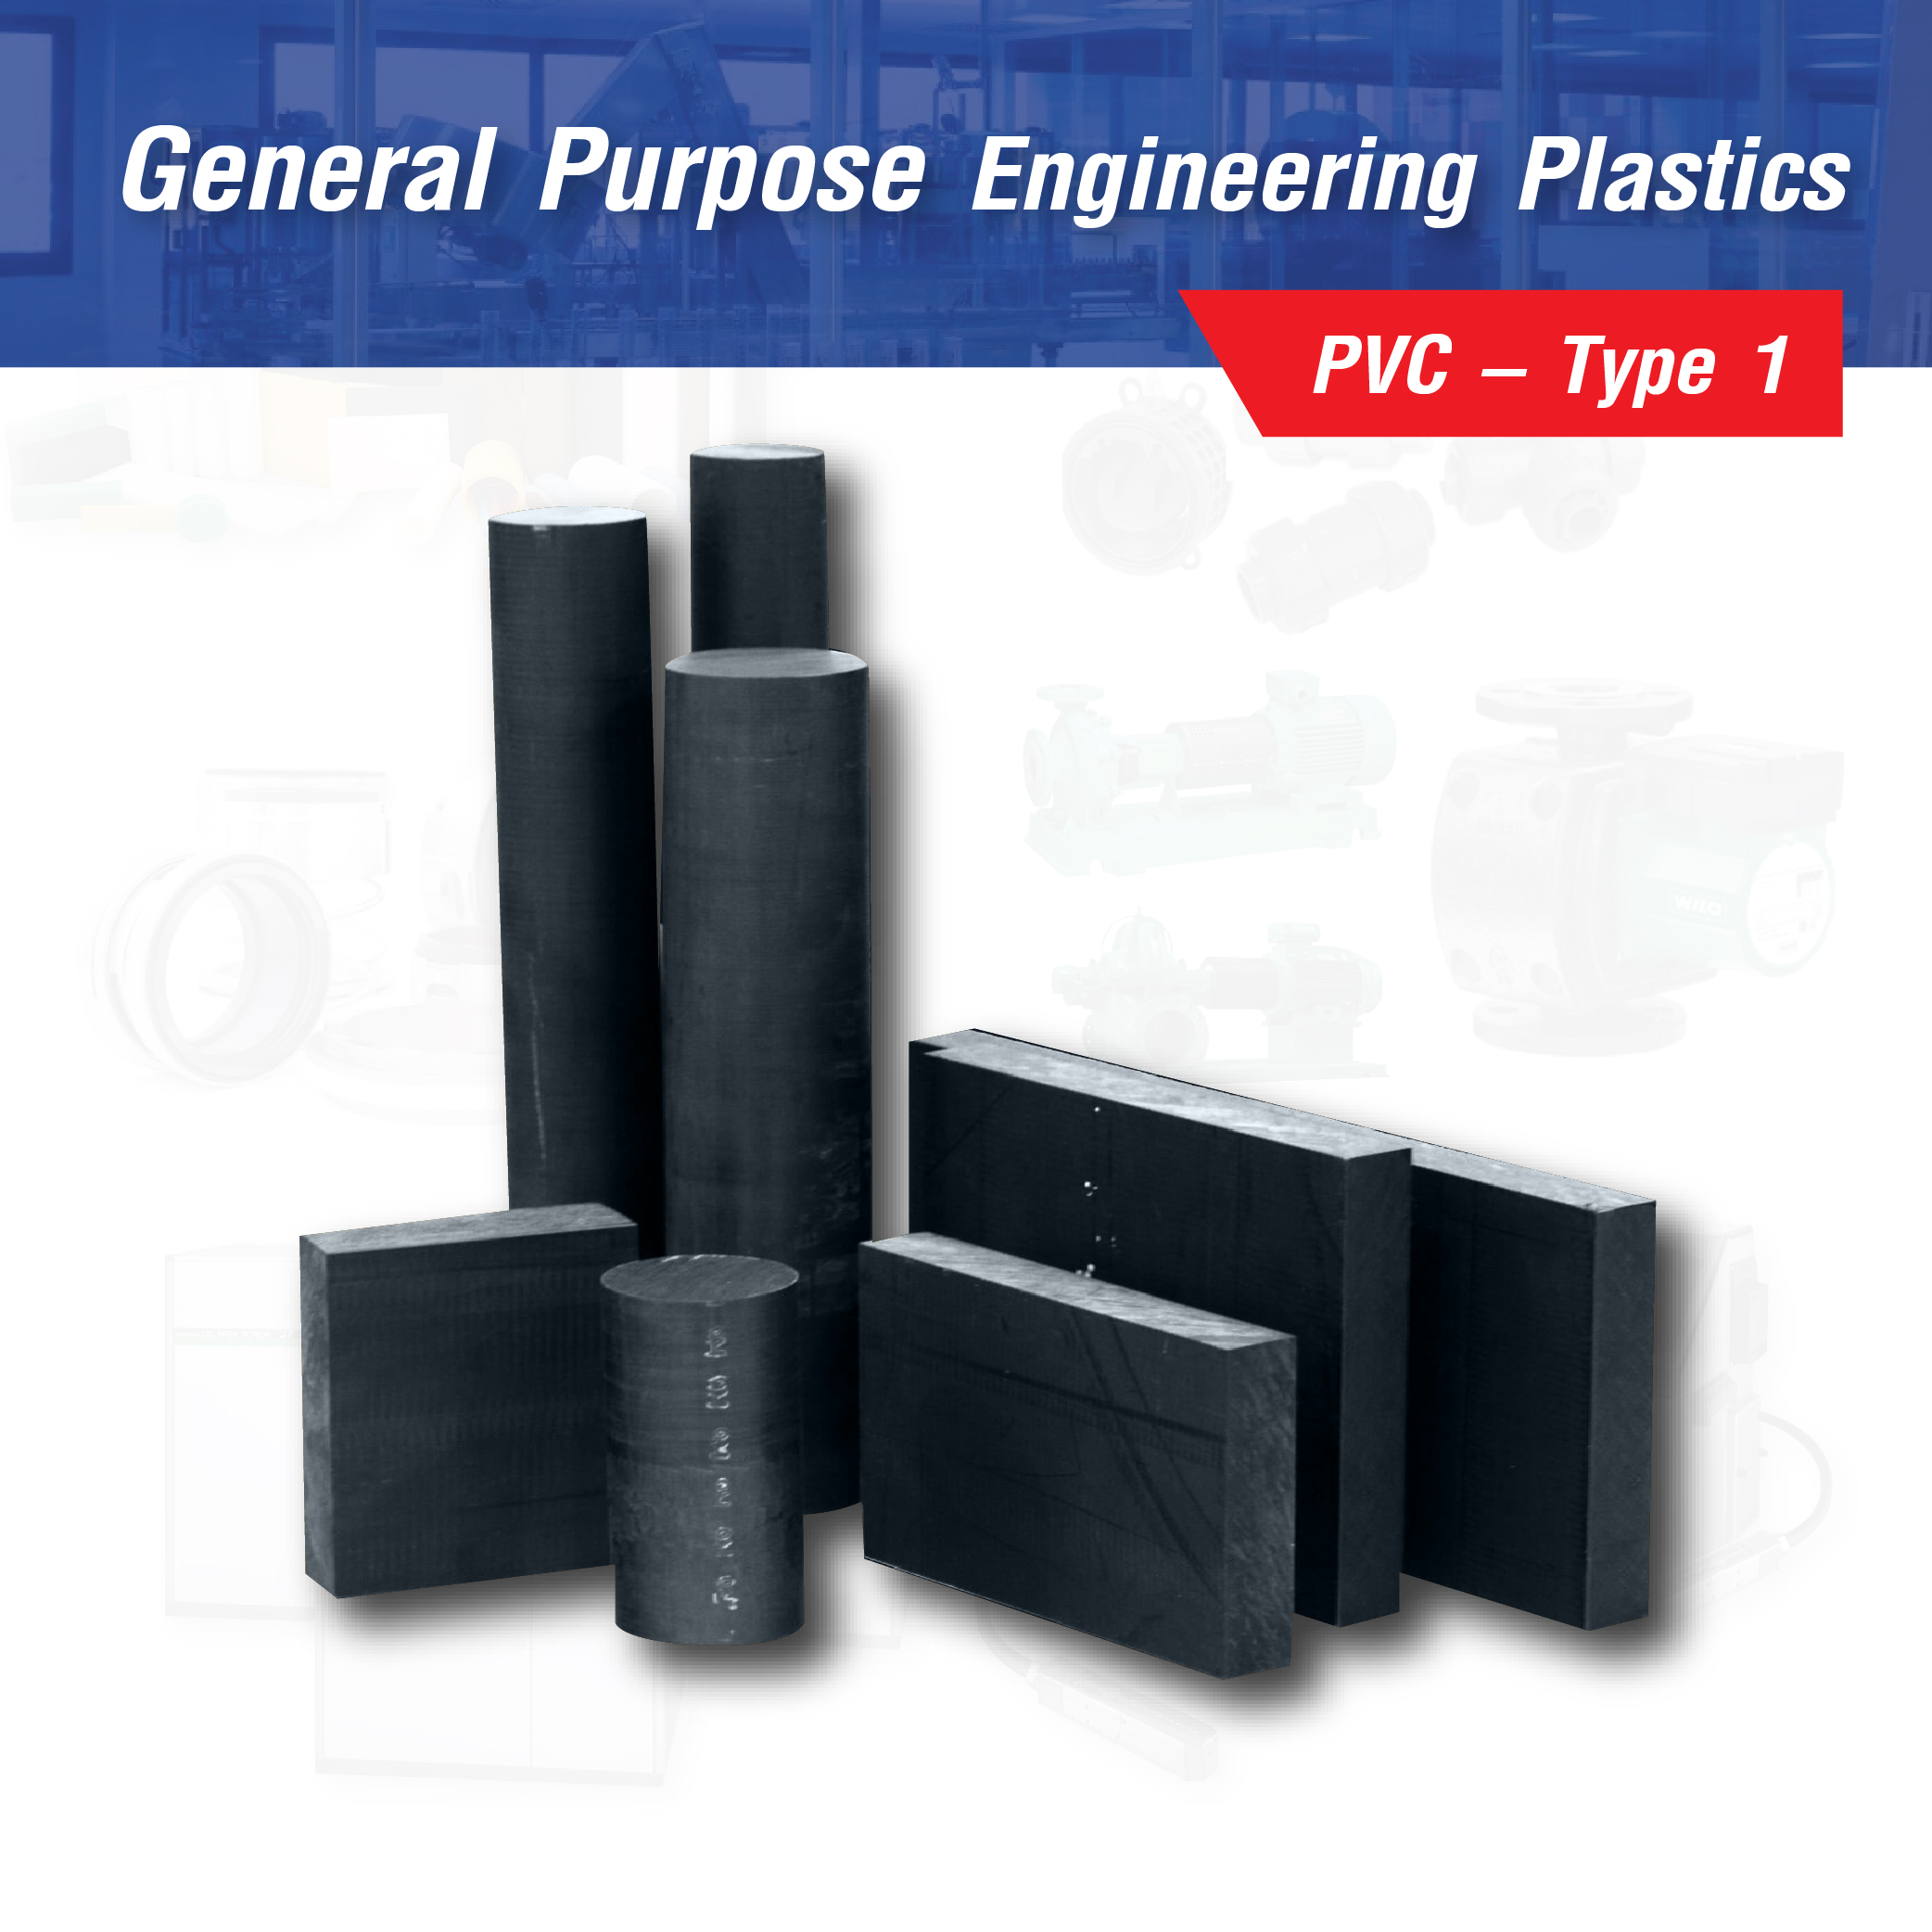 General Purpose Engineering Plastics